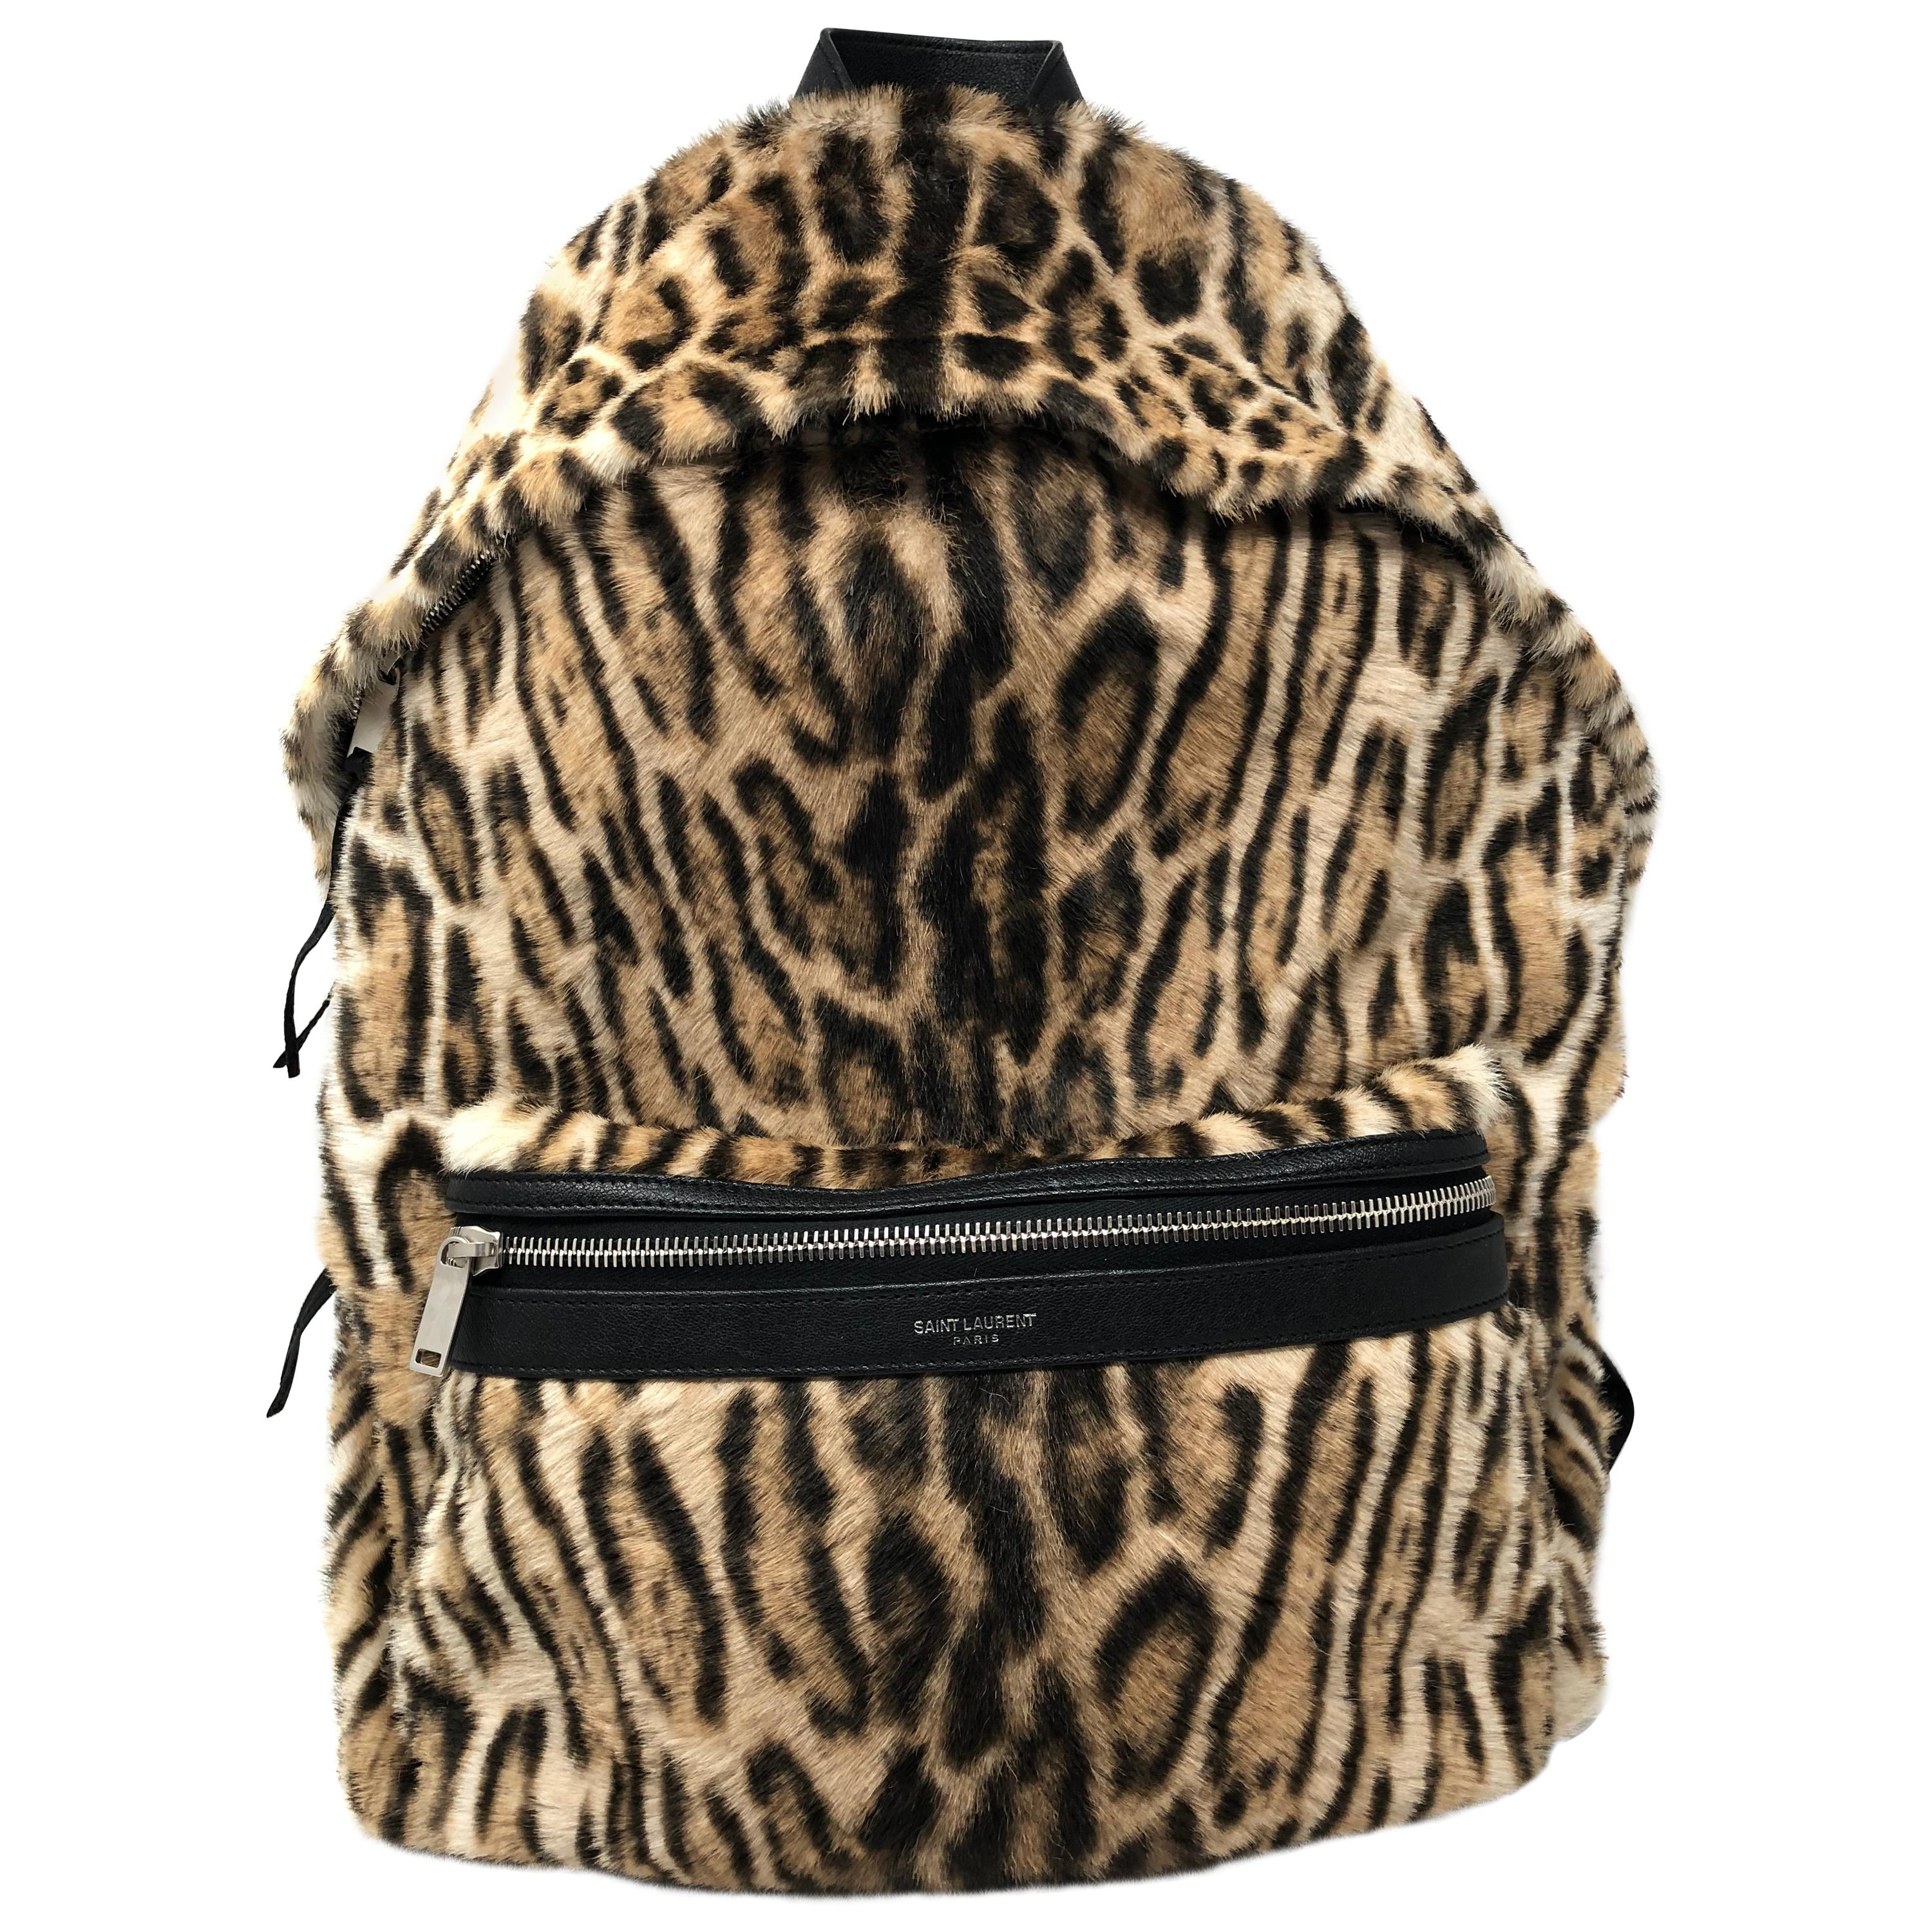 YSL Leopard Backpack 